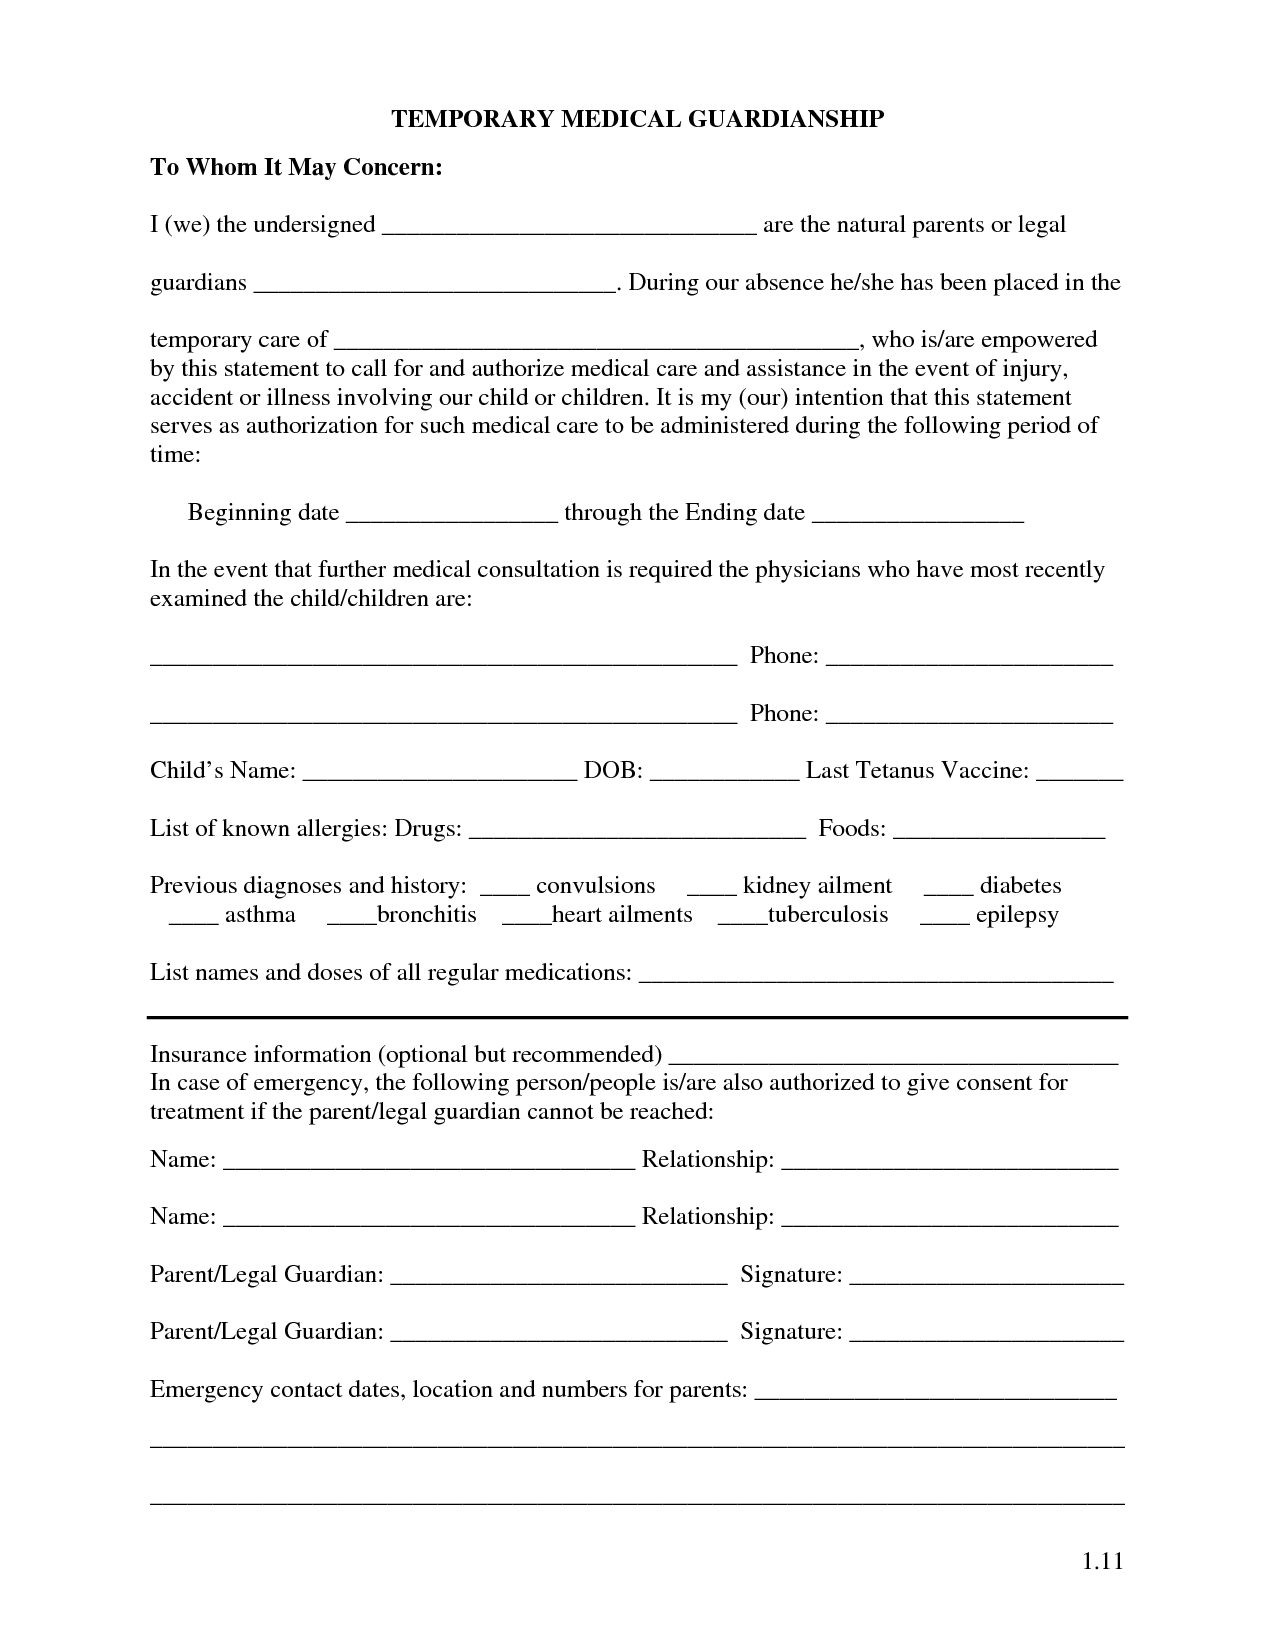 Free Printable Temporary Guardianship Forms | Forms - Free Printable Legal Guardianship Forms